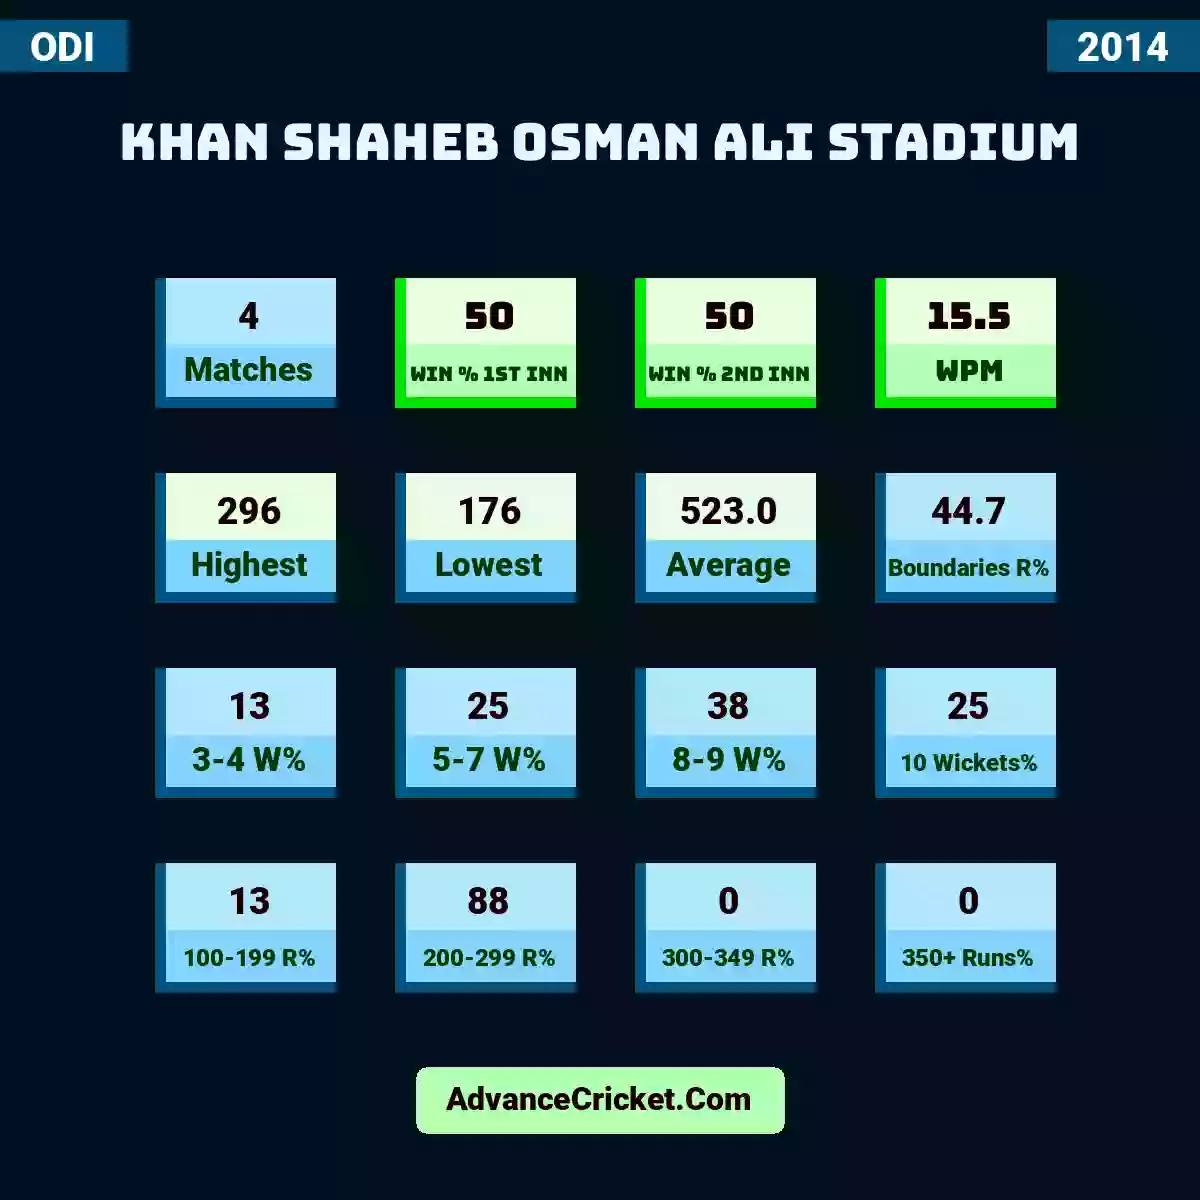 Image showing Khan Shaheb Osman Ali Stadium with Matches: 4, Win % 1st Inn: 50, Win % 2nd Inn: 50, WPM: 15.5, Highest: 296, Lowest: 176, Average: 523.0, Boundaries R%: 44.7, 3-4 W%: 13, 5-7 W%: 25, 8-9 W%: 38, 10 Wickets%: 25, 100-199 R%: 13, 200-299 R%: 88, 300-349 R%: 0, 350+ Runs%: 0.